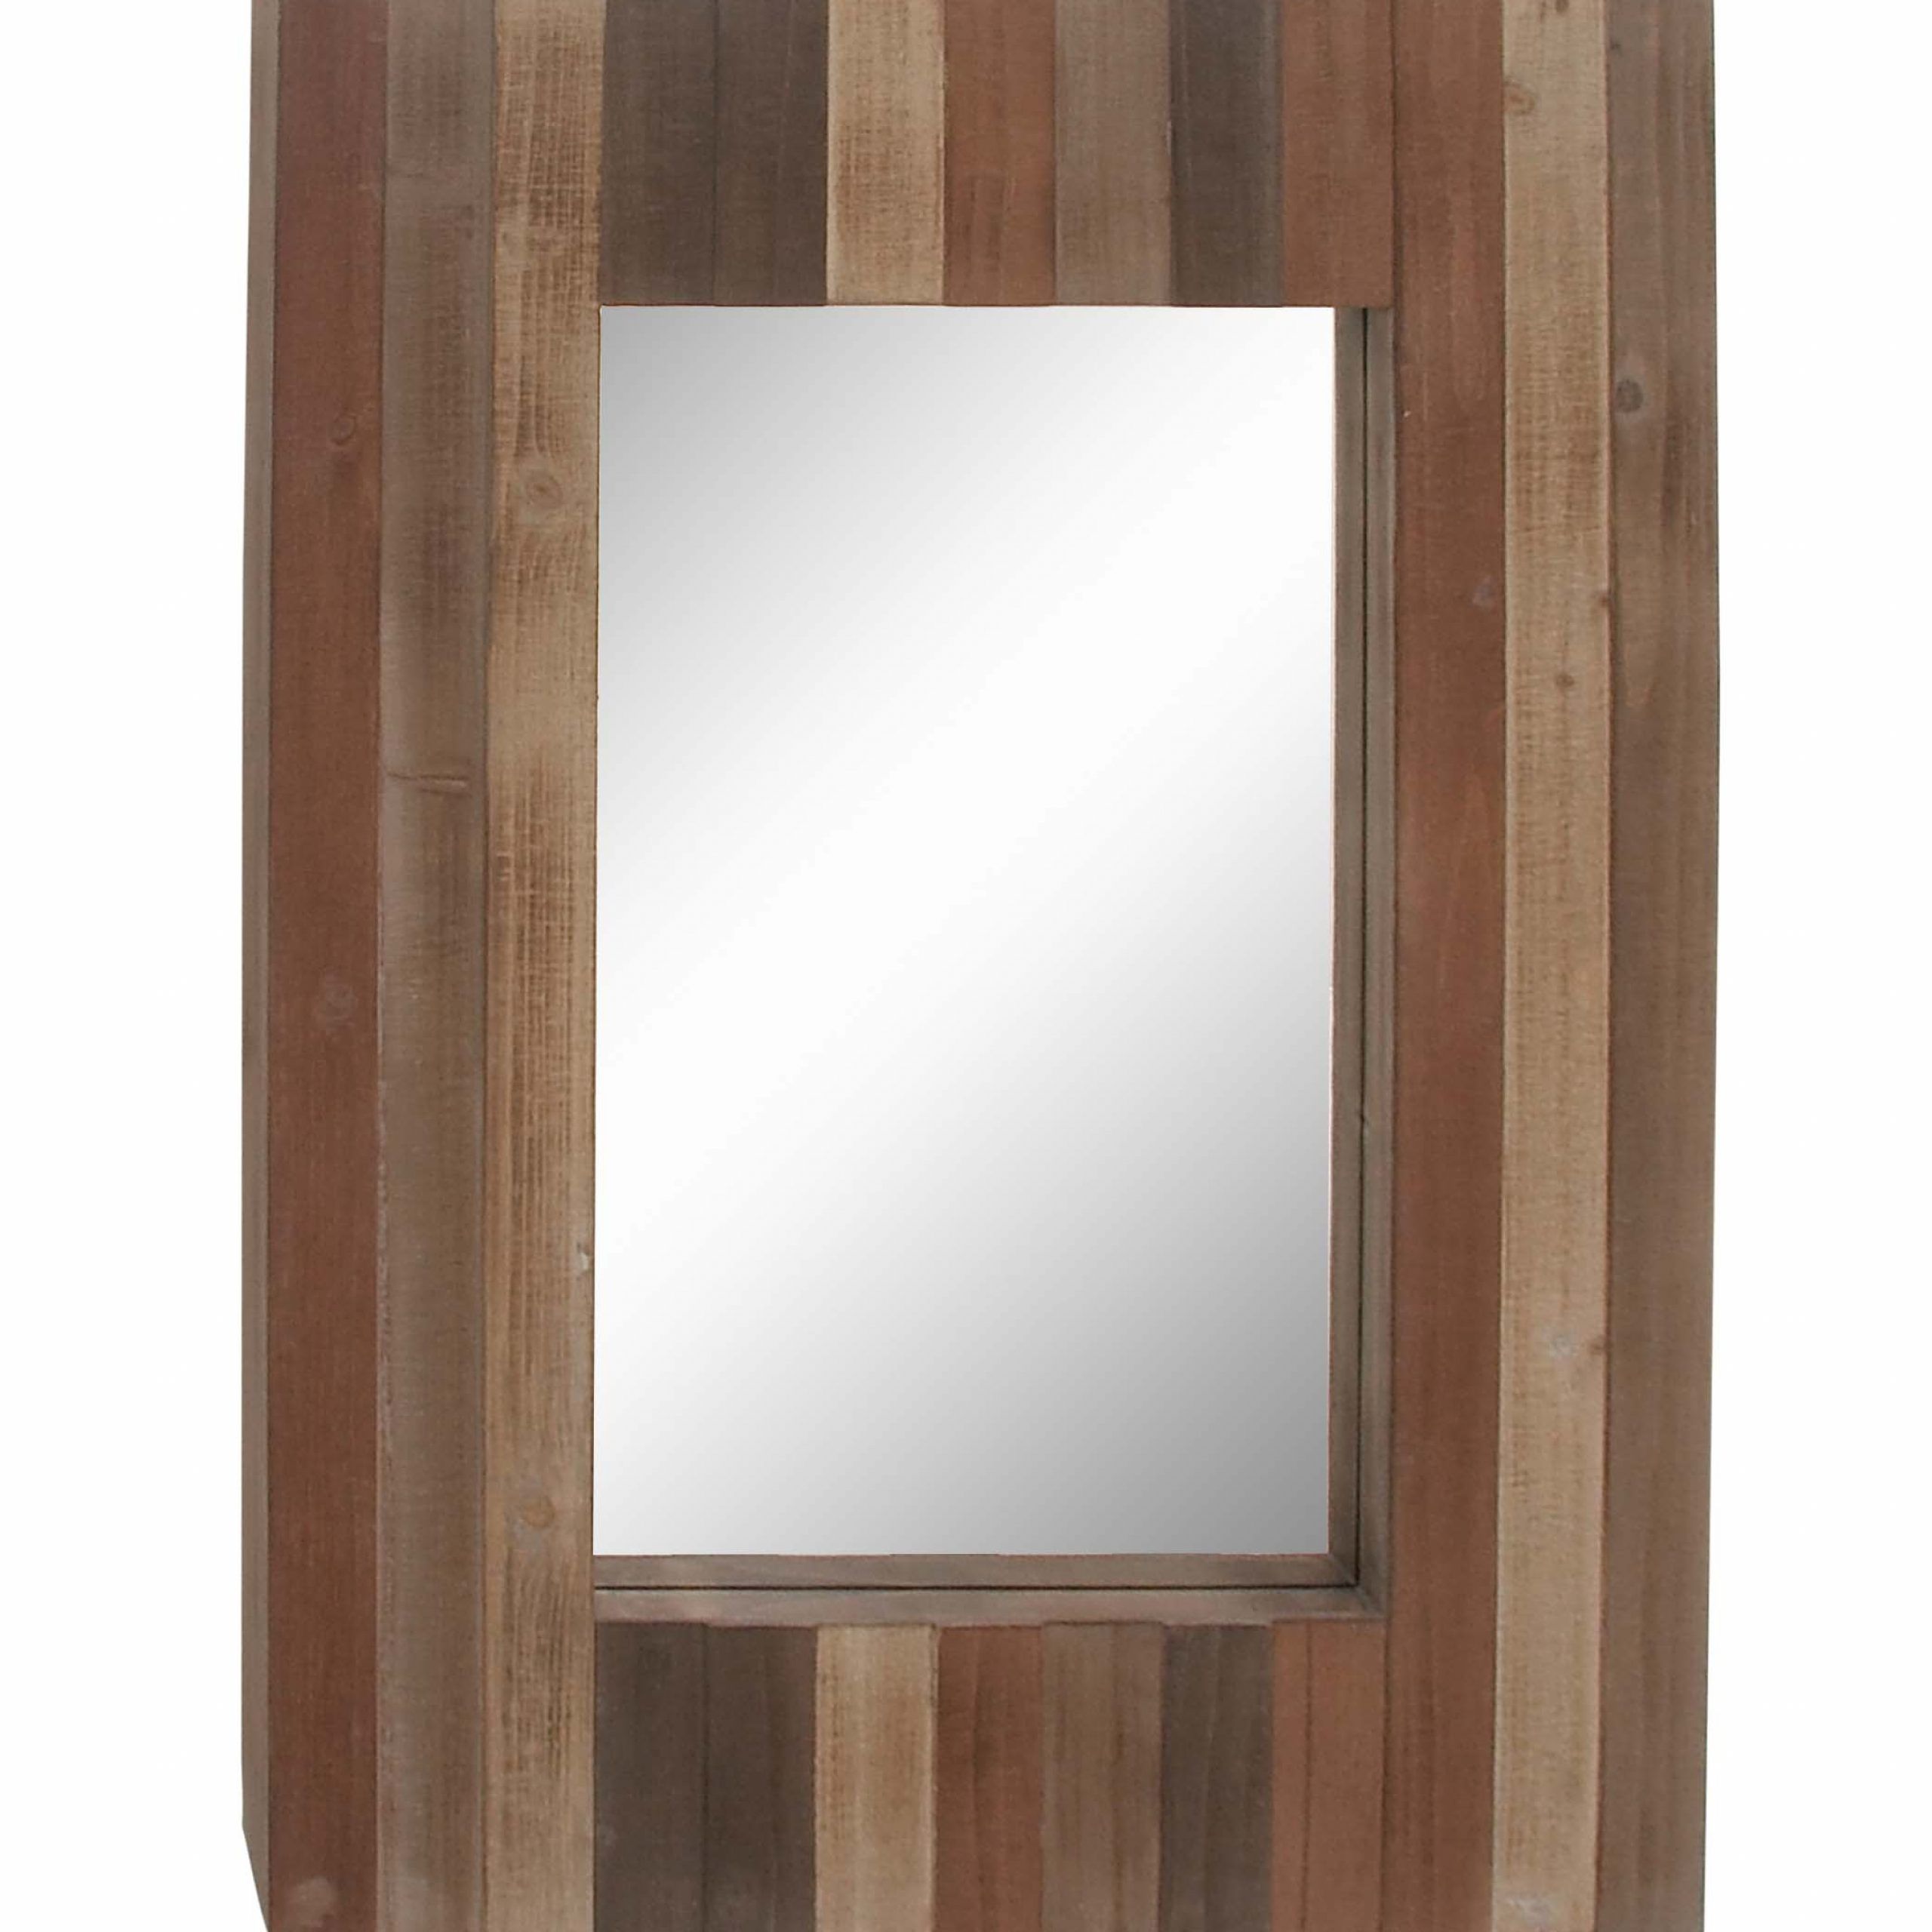 Decmode Rectangular 38 X 28 Inch Slat Style Wood Wall Mirror, Dark With Natural Iron Rectangular Wall Mirrors (View 4 of 15)